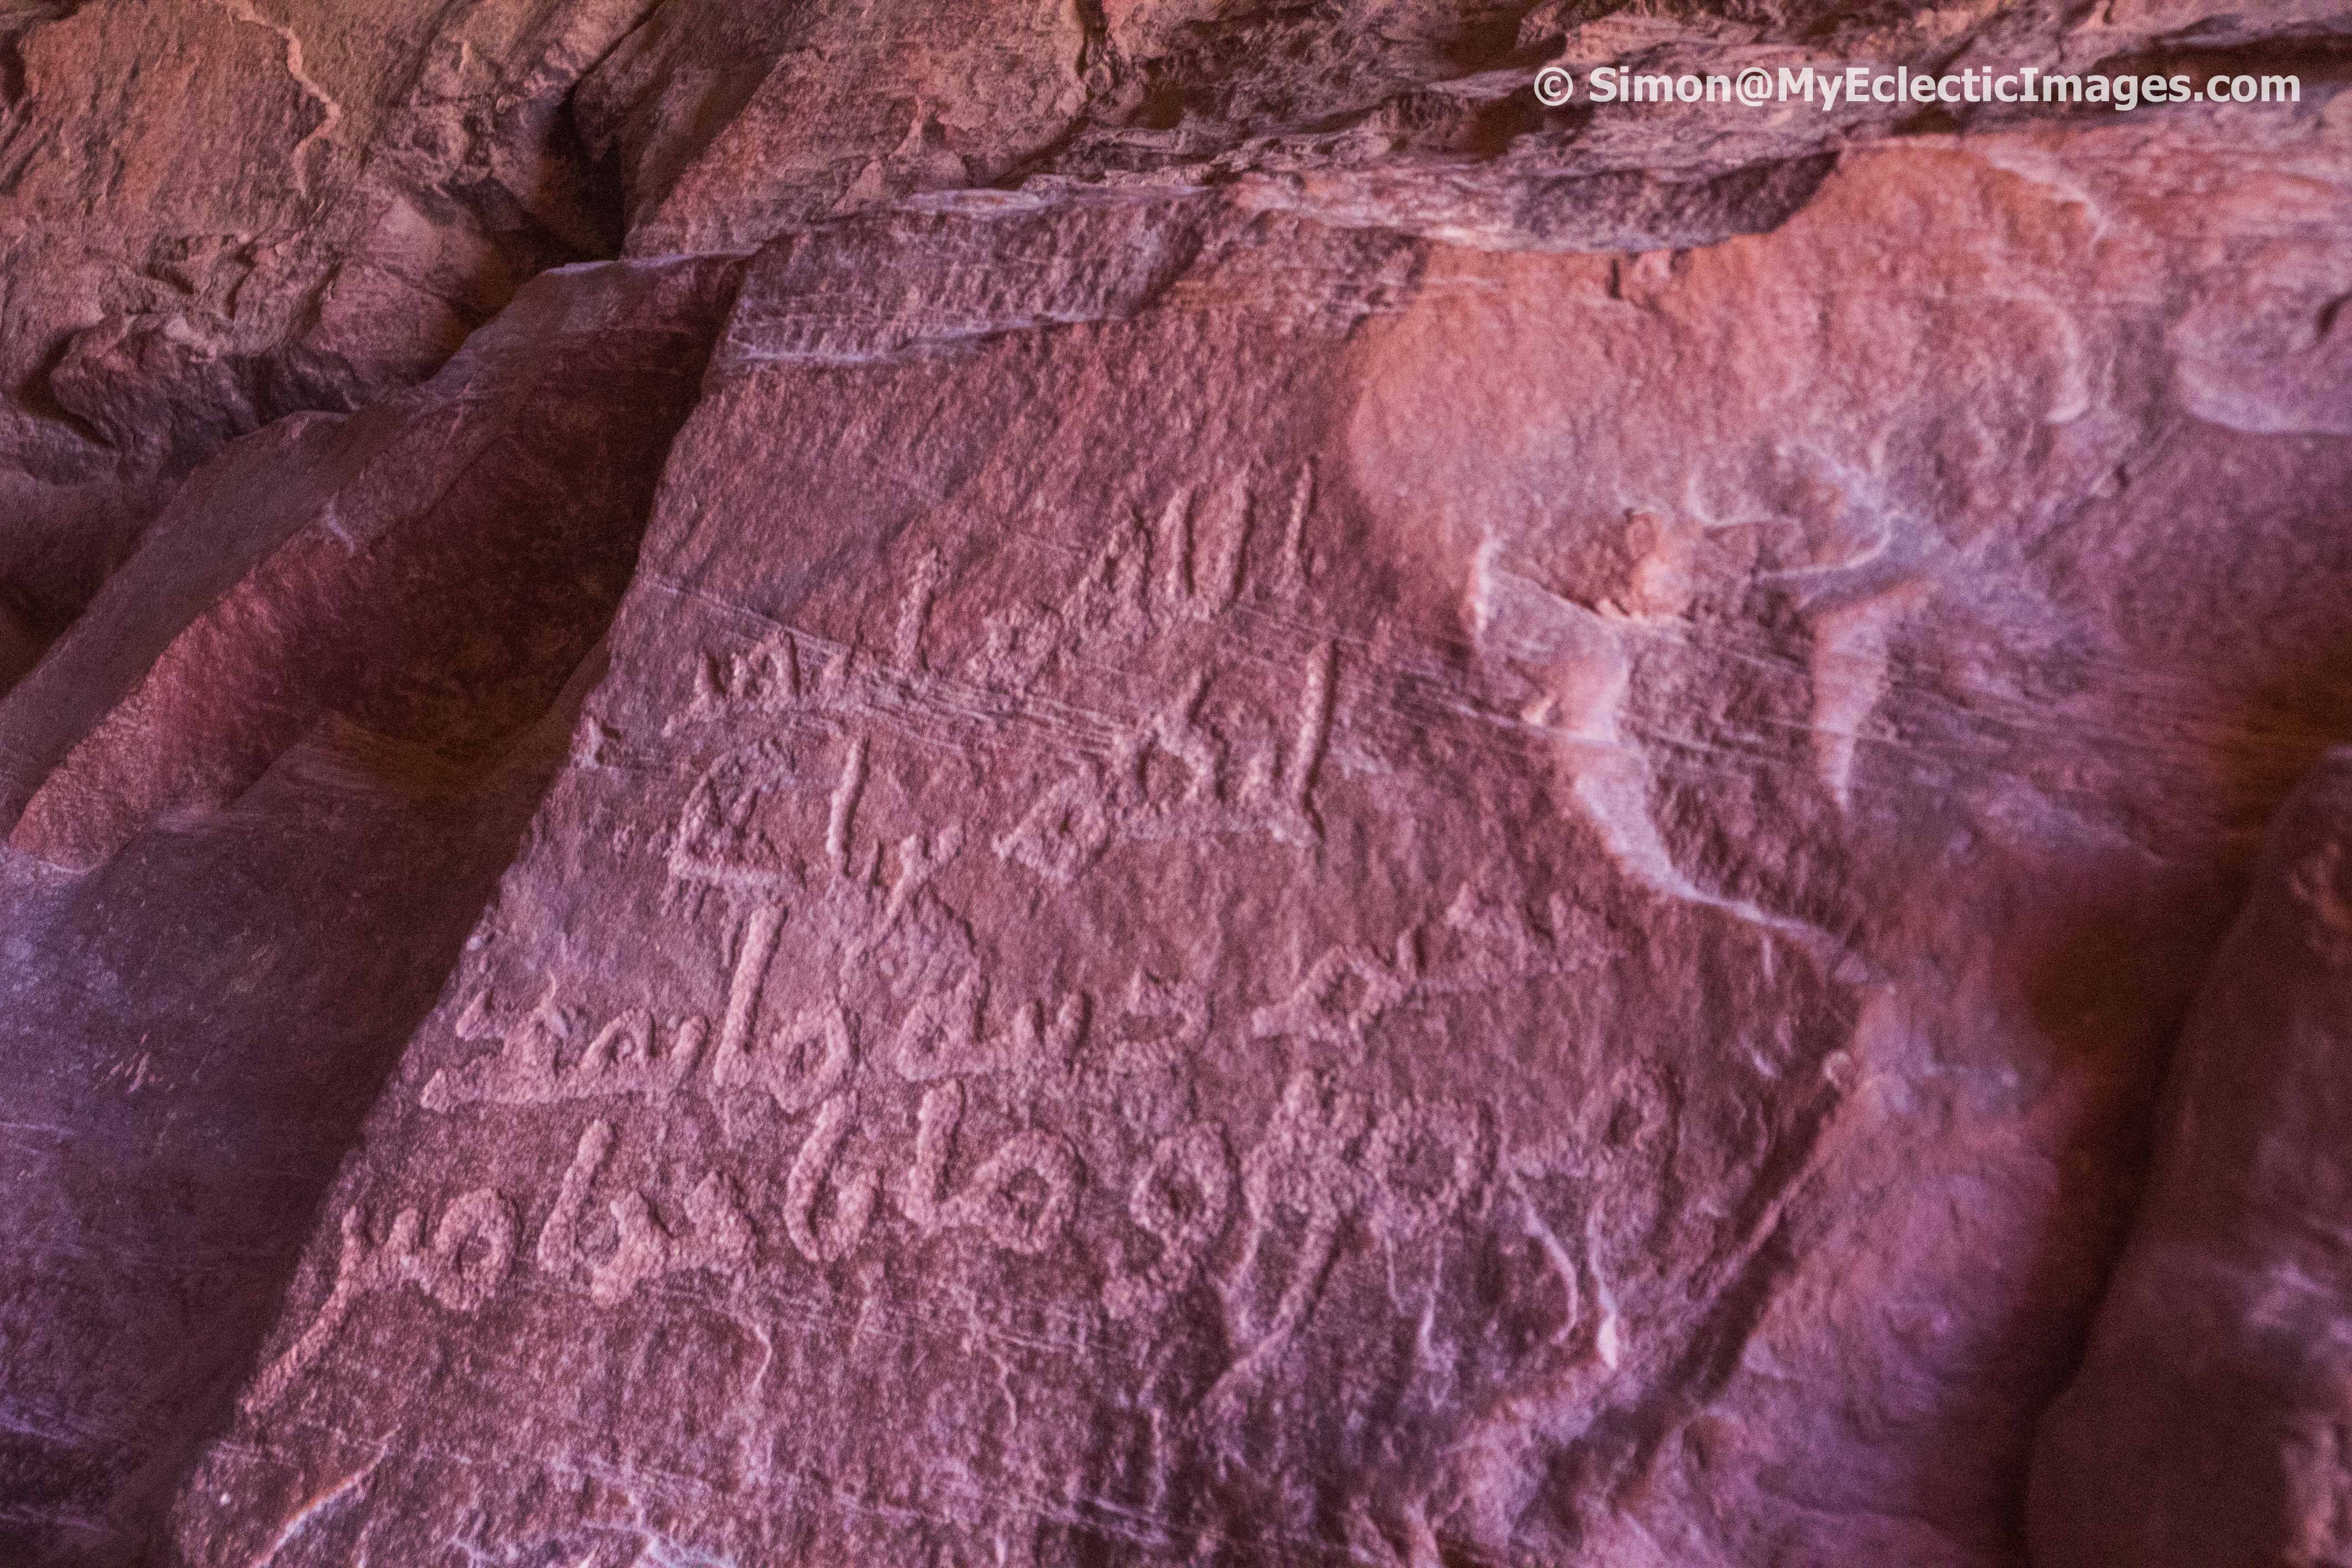 Arabic Writing Carved into Rock of a Narrow Wadi Jordan